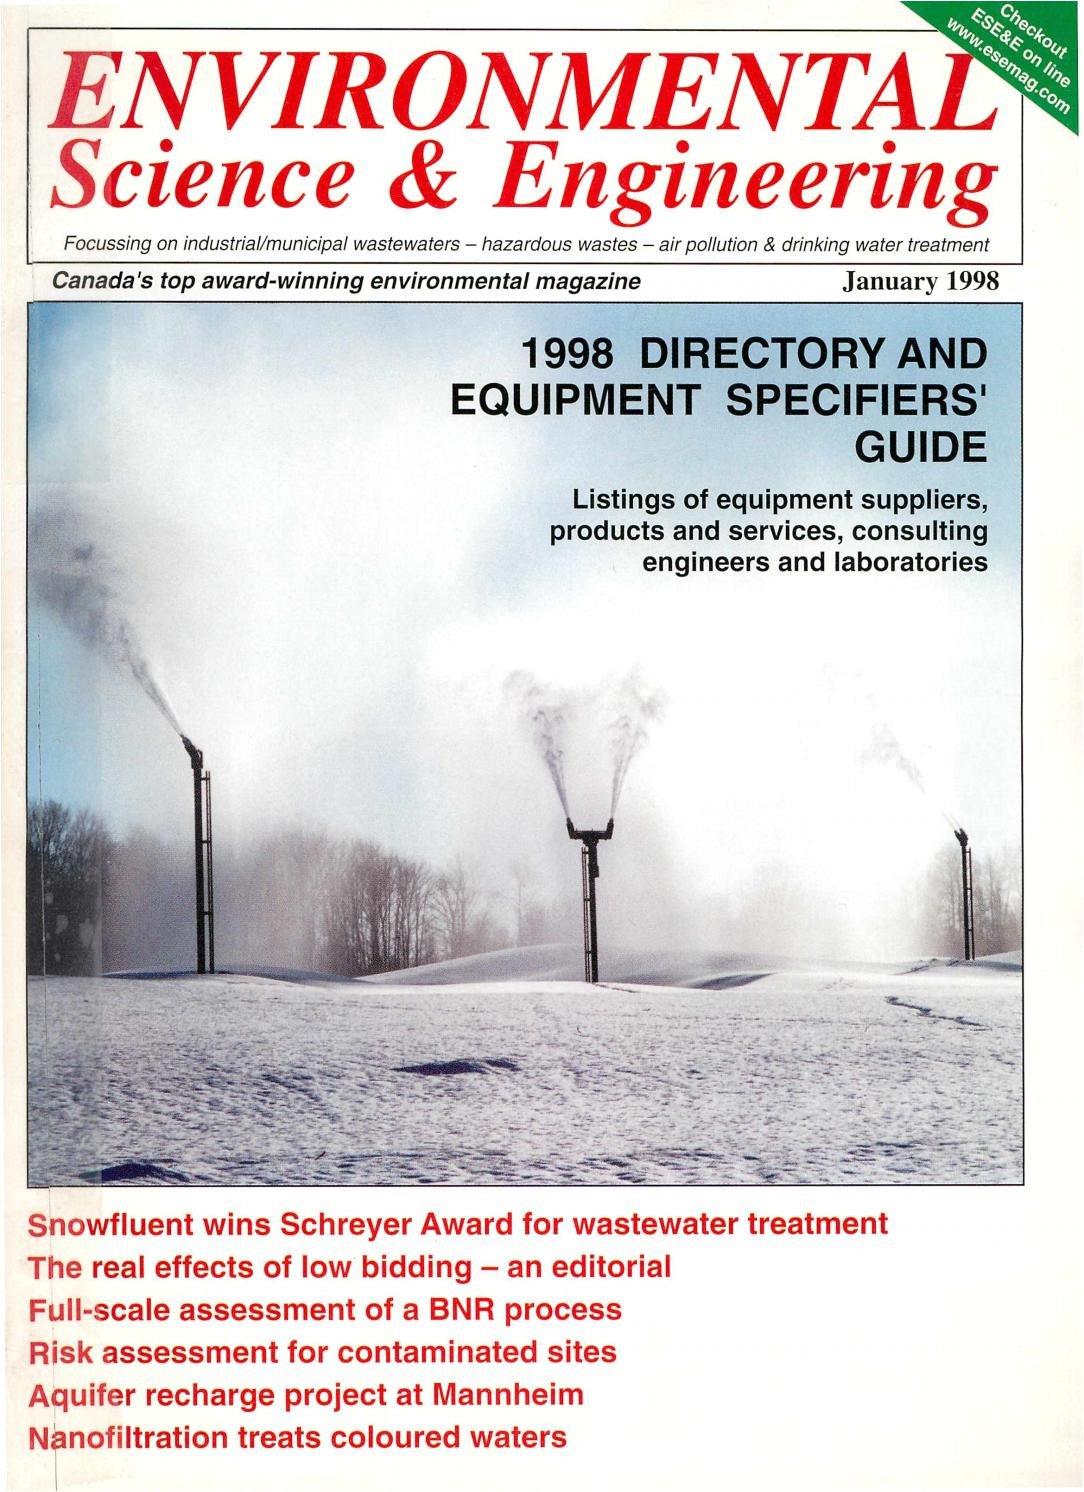 environmental science engineering magazine esemag january 1998 by environmental science and engineering magazine issuu